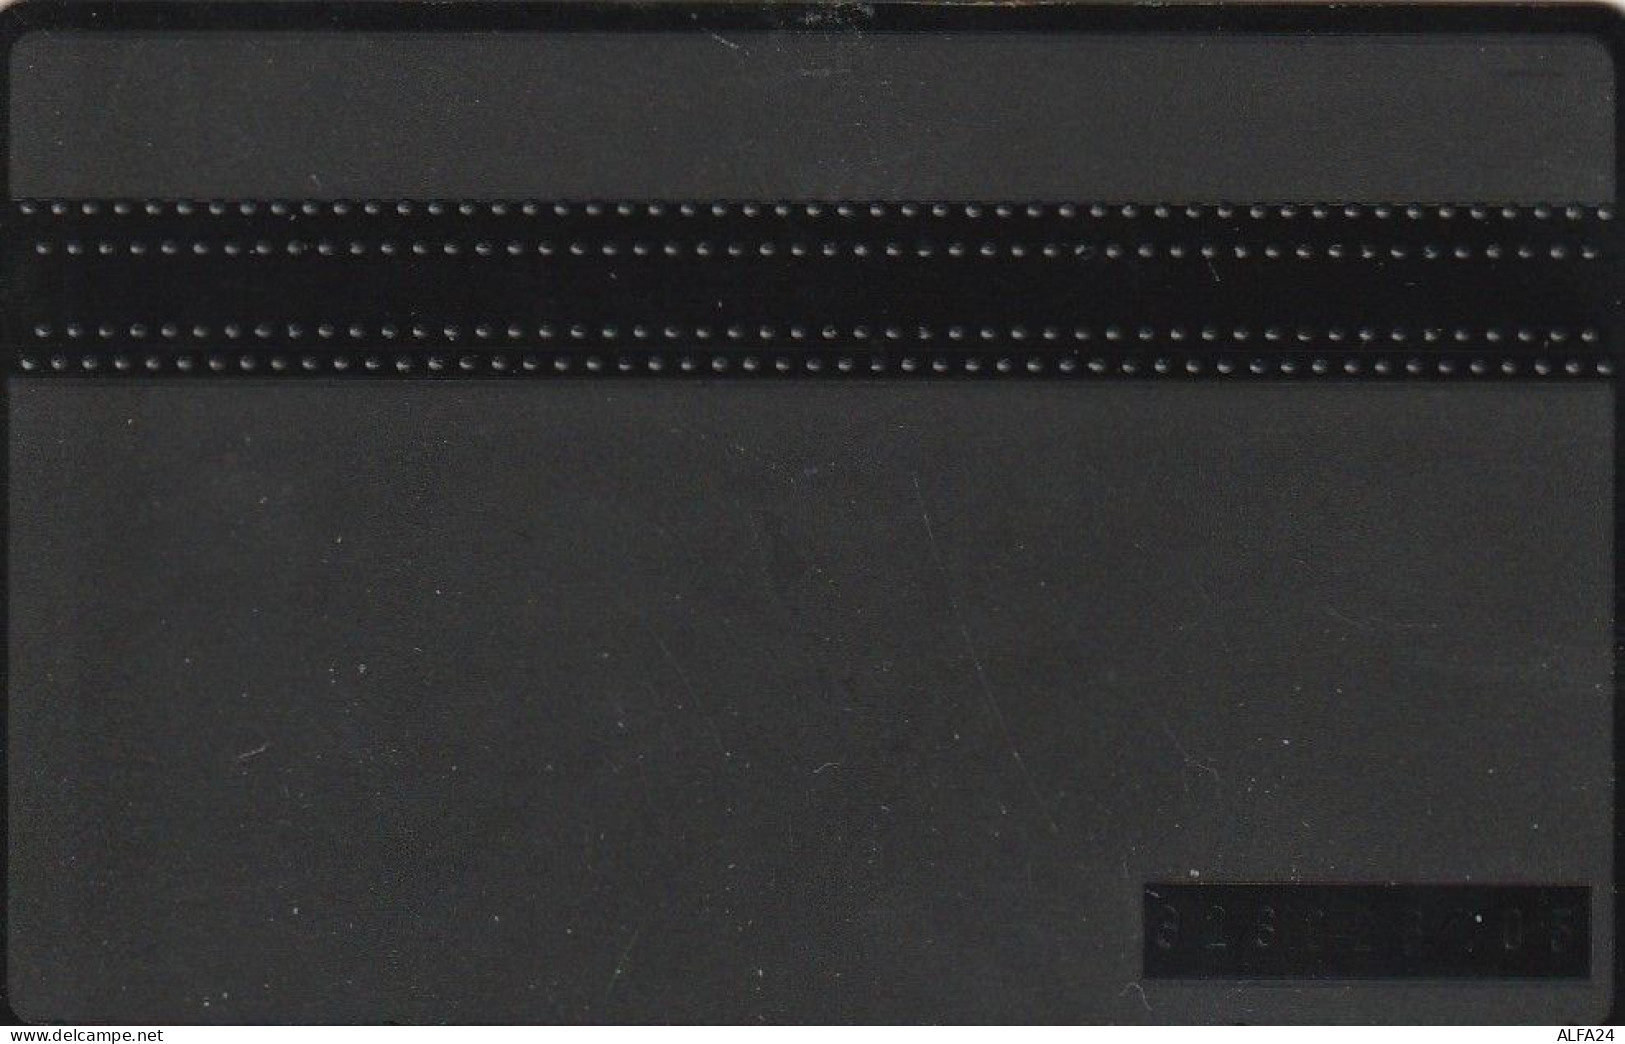 PHONE CARD BELGIO LG (CV6631 - Senza Chip